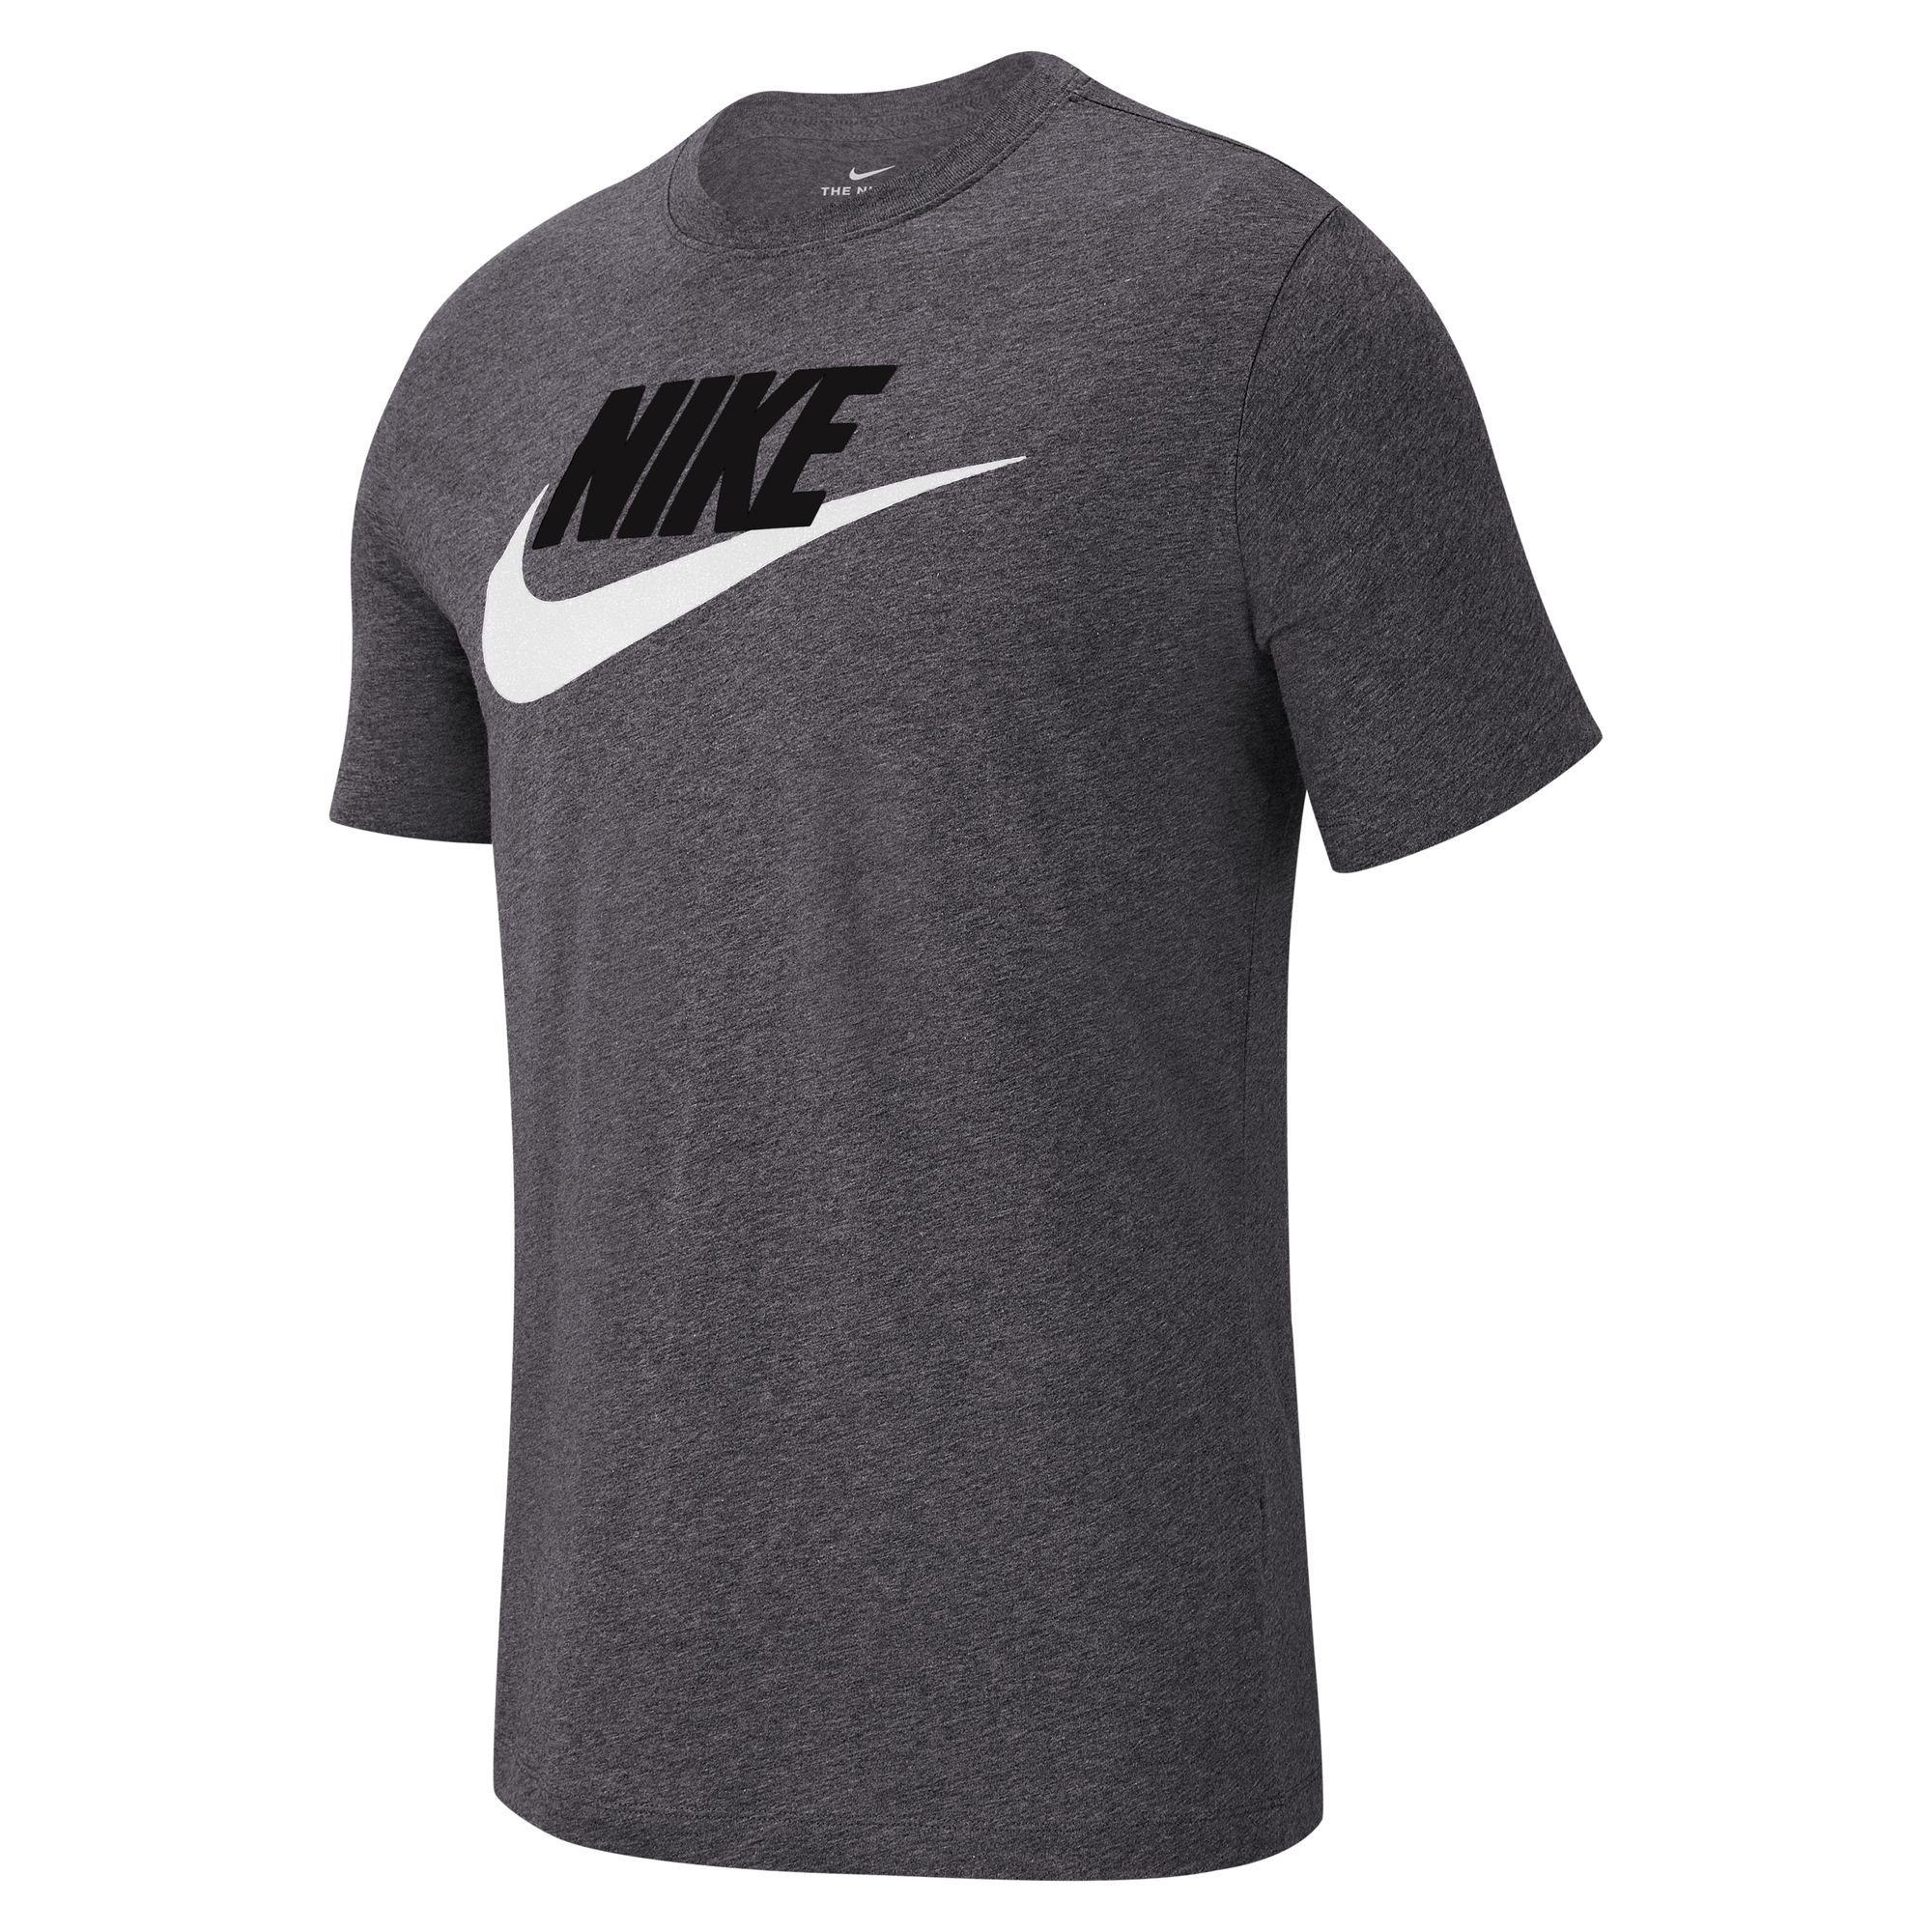 MEN'S Sportswear T-SHIRT Nike T-Shirt grau-meliert